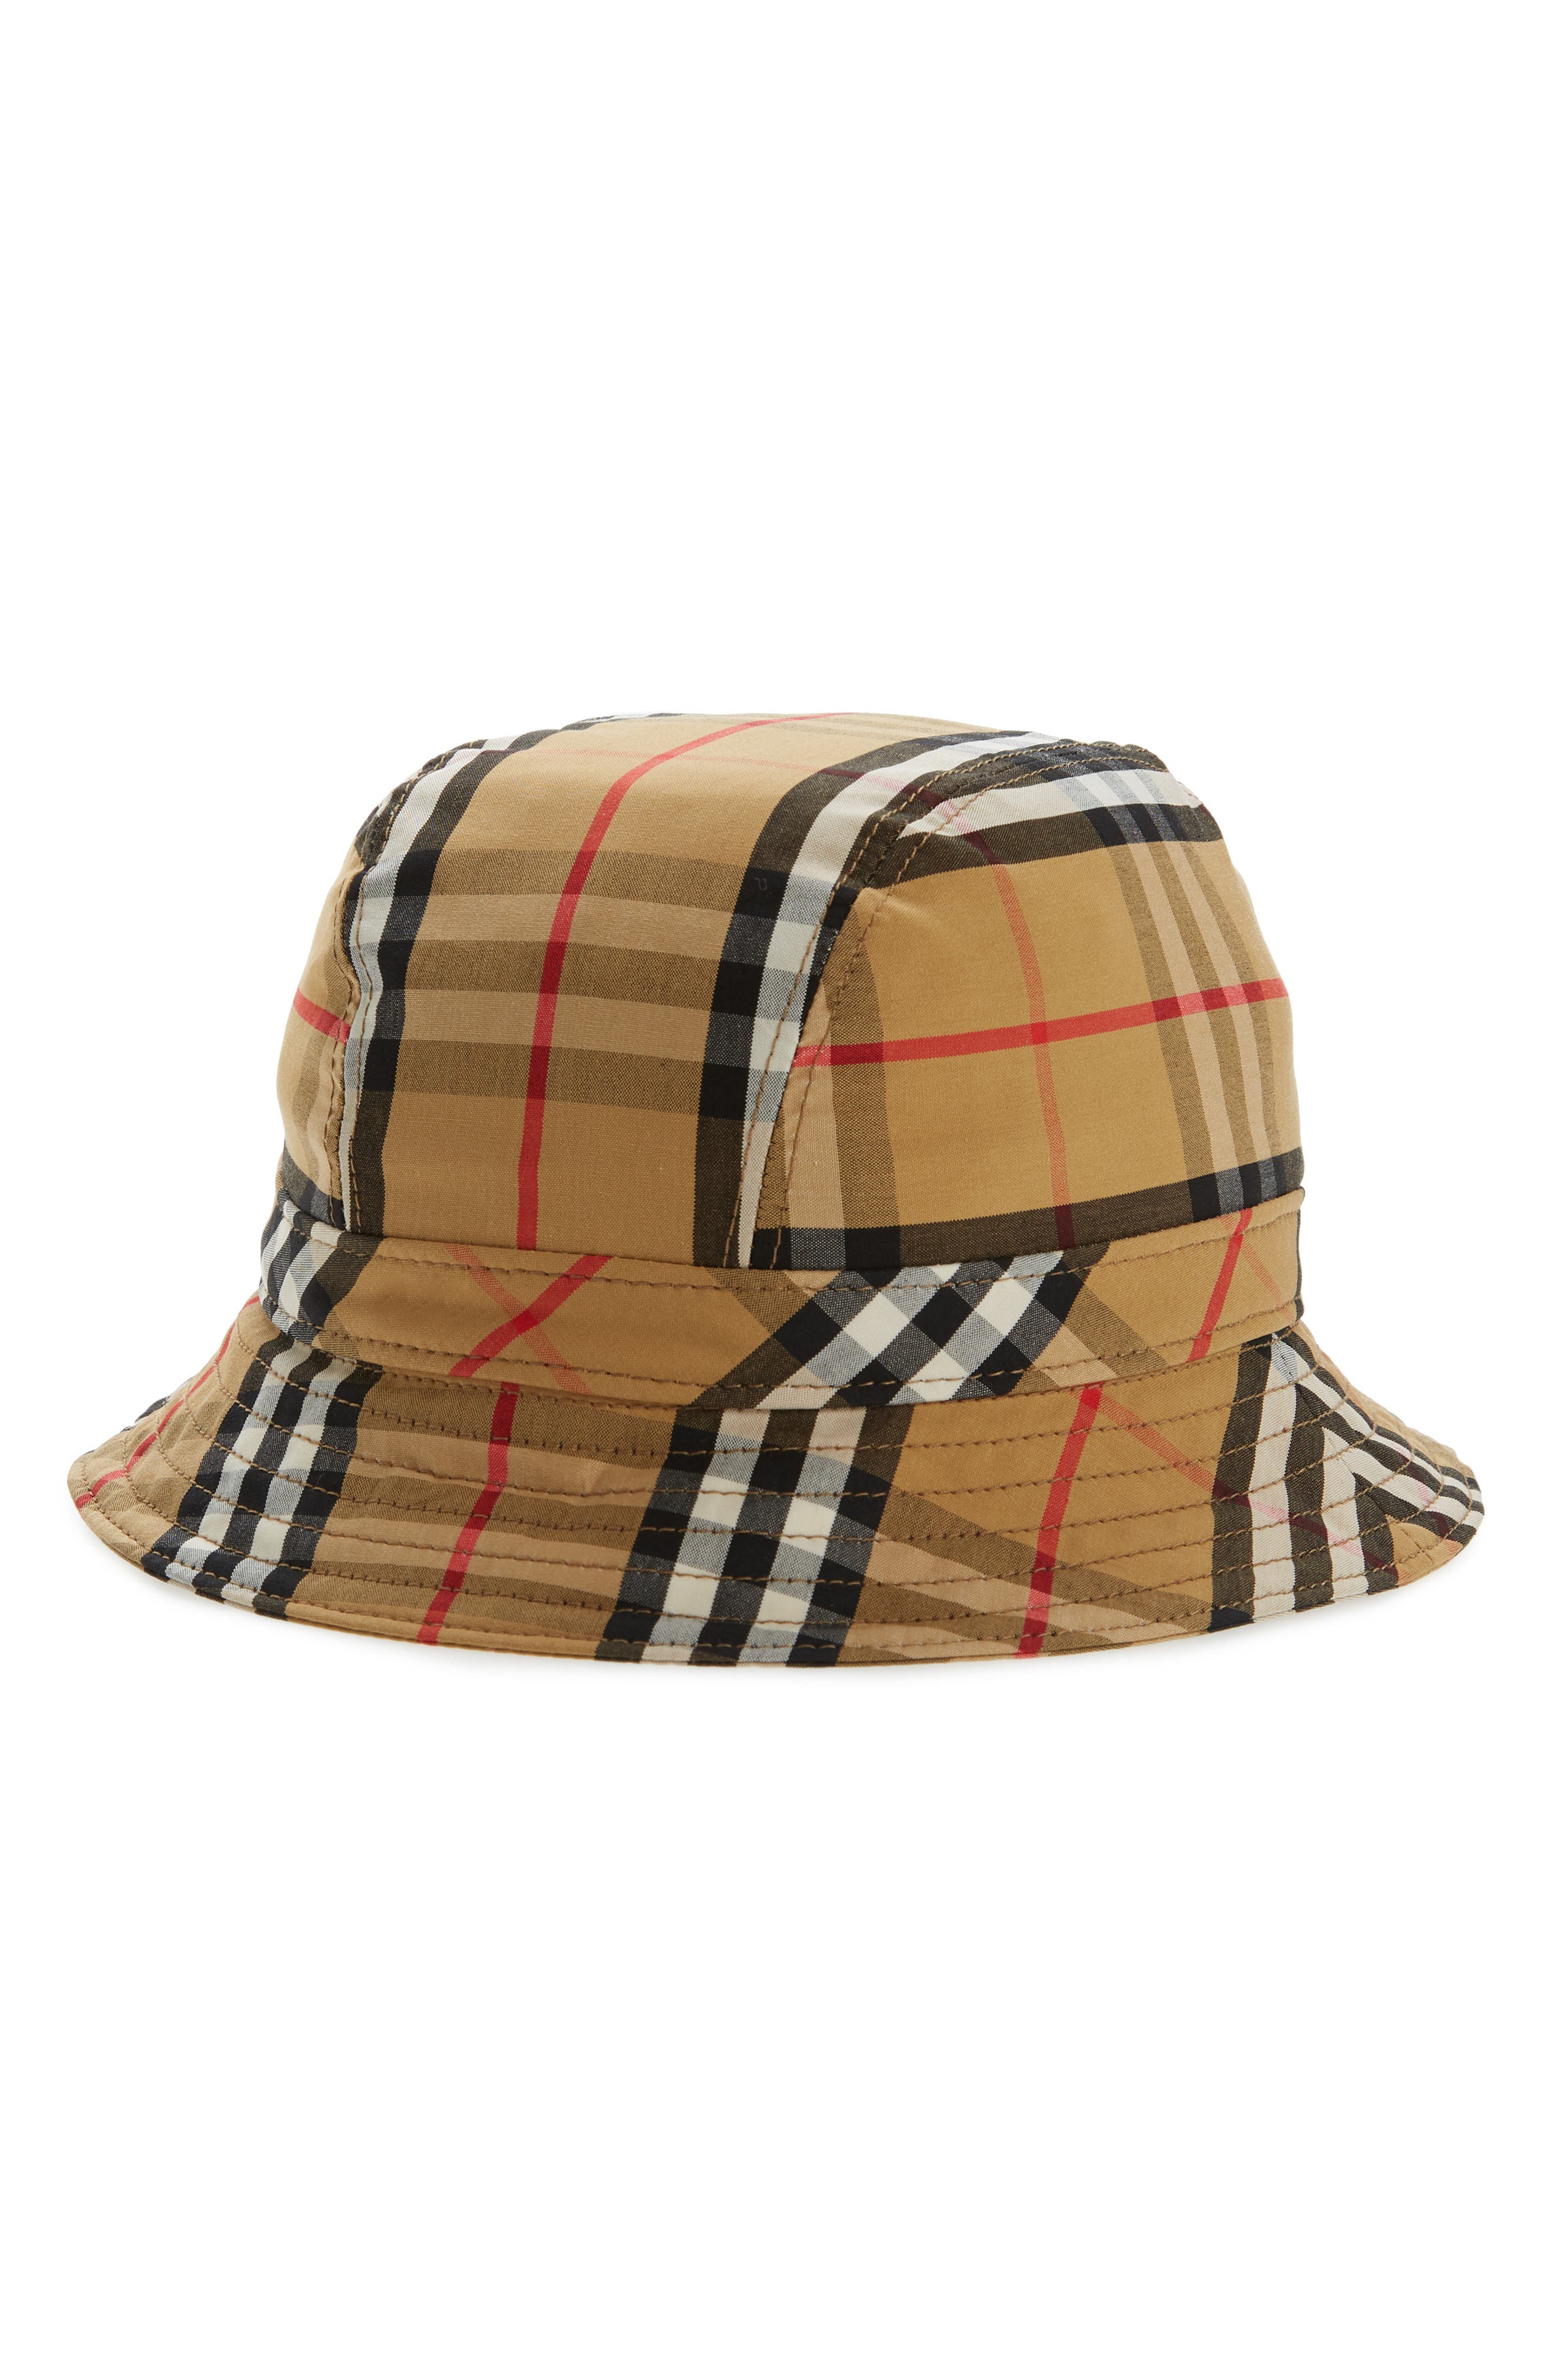 Burberry Vintage Check Bucket Hat 